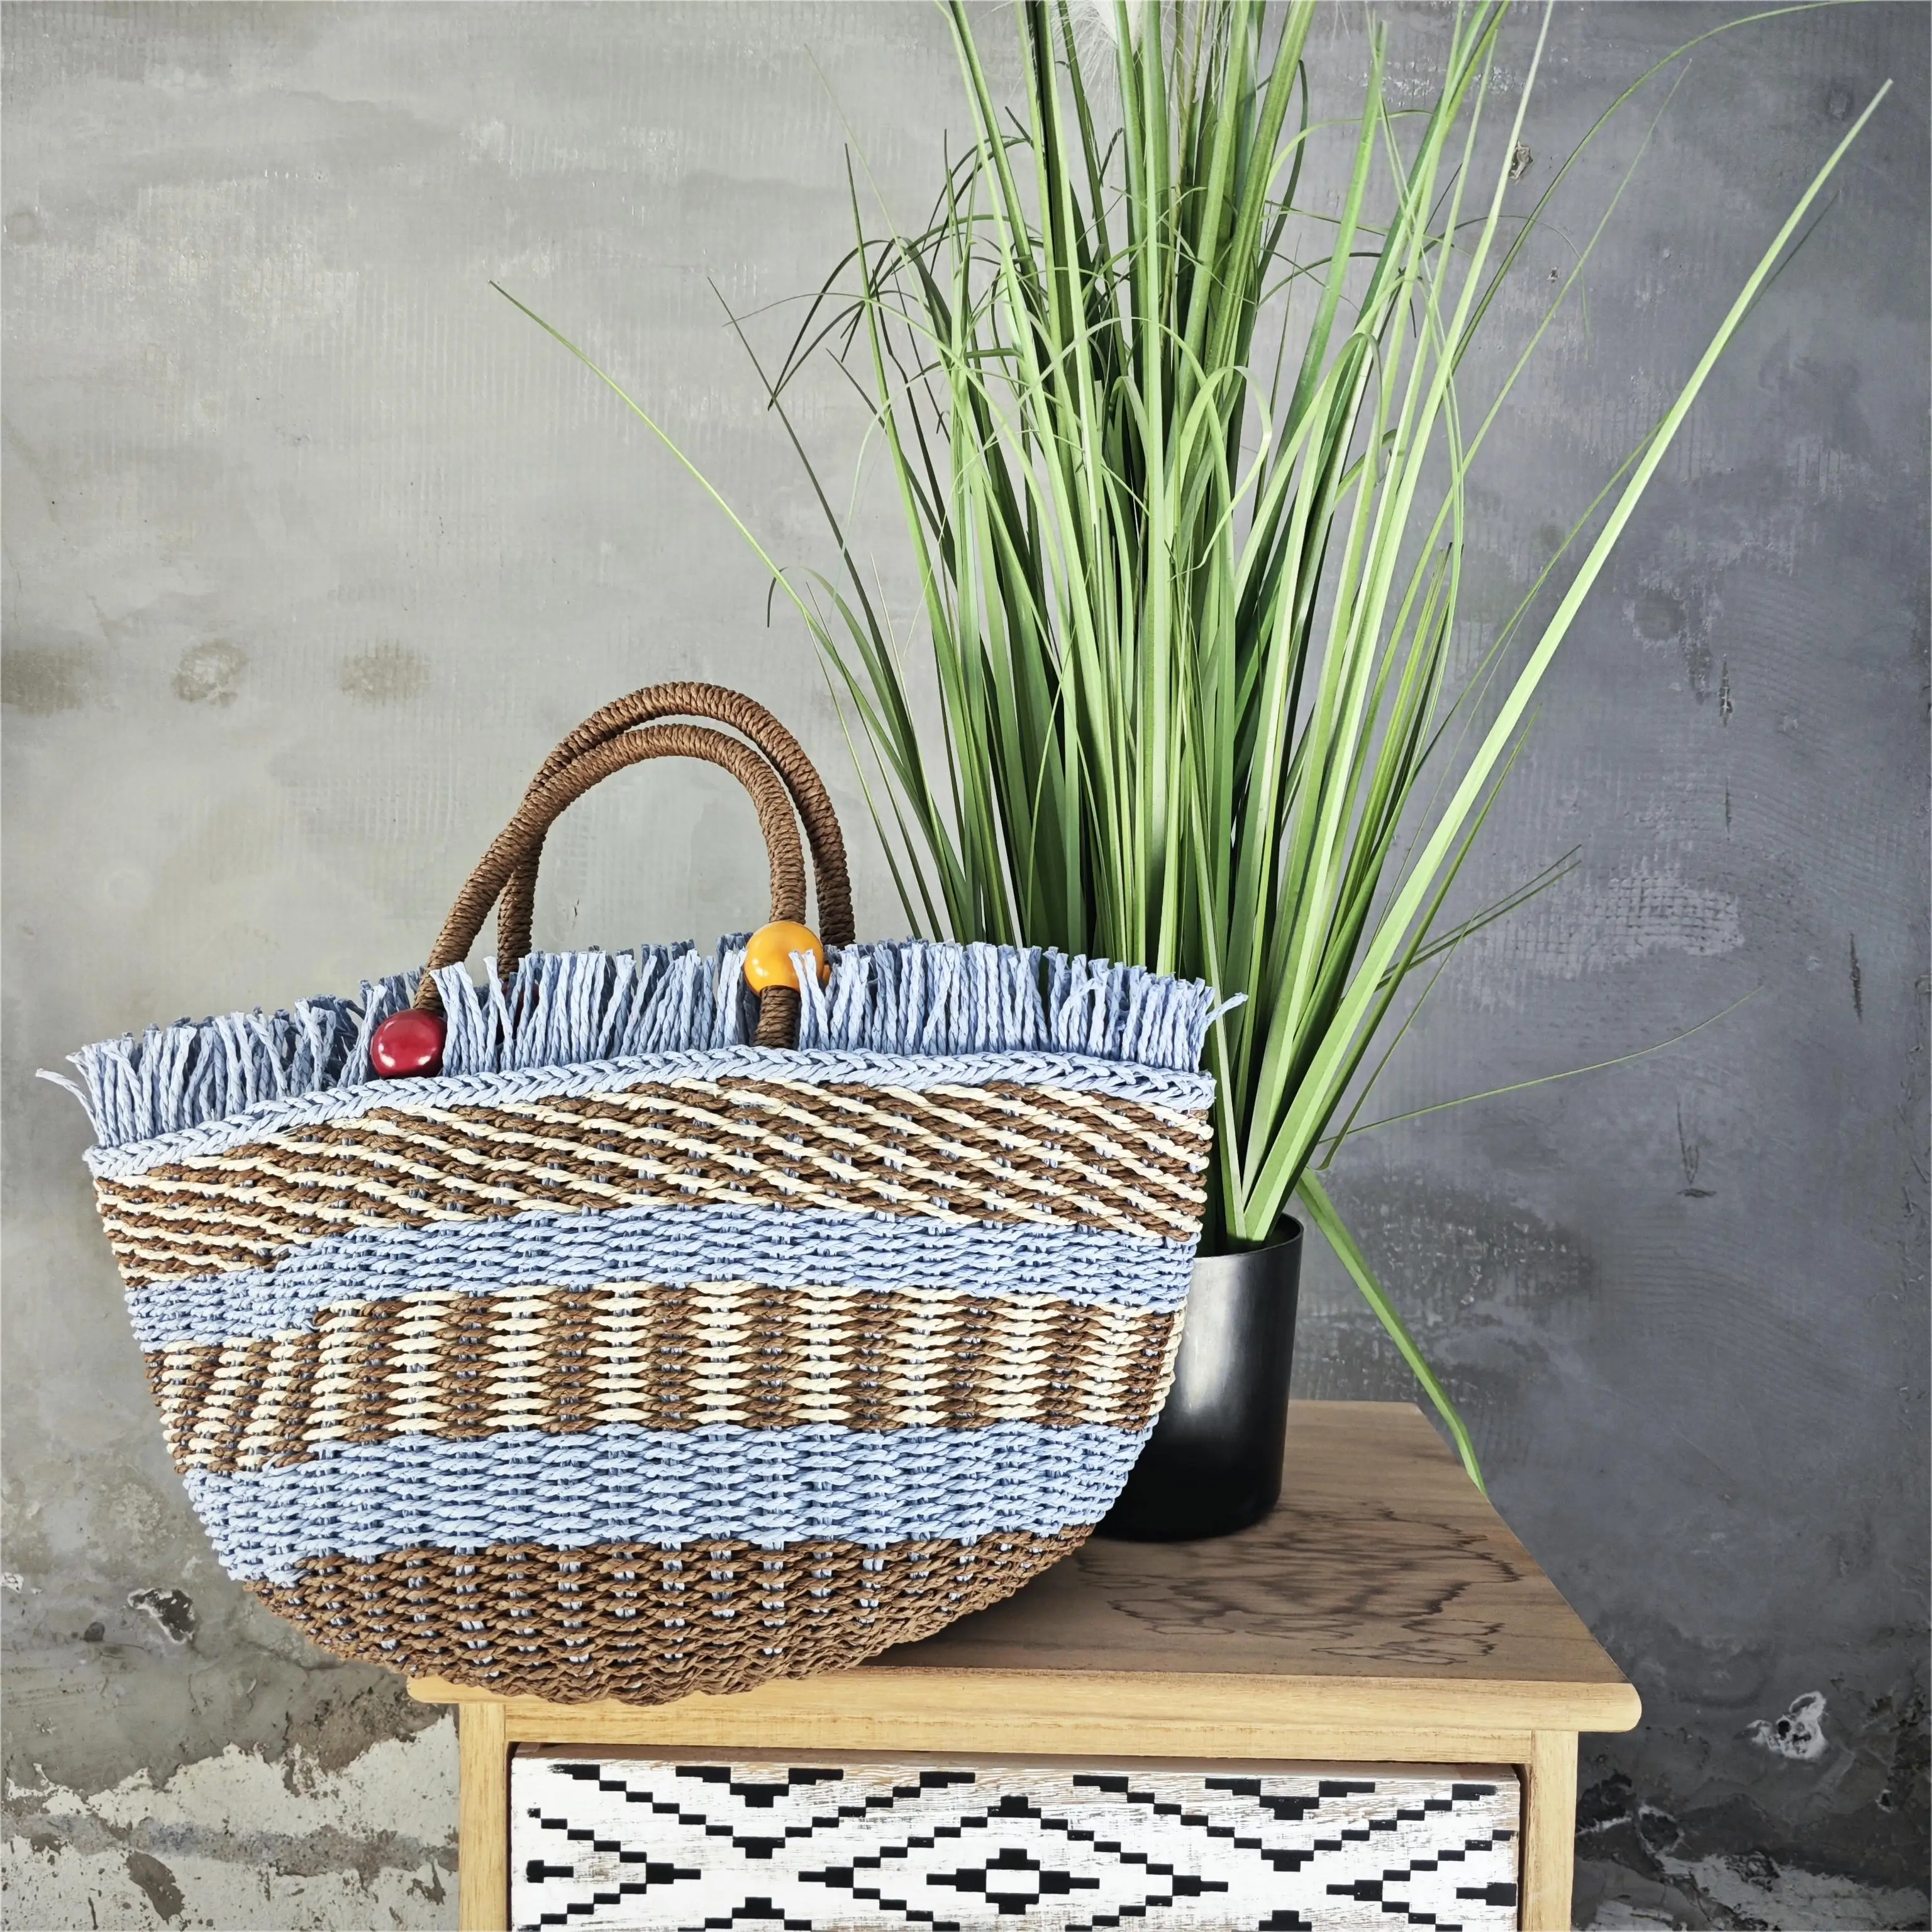 New wholesale woven paper rope bag handbag beach bag crochet bag